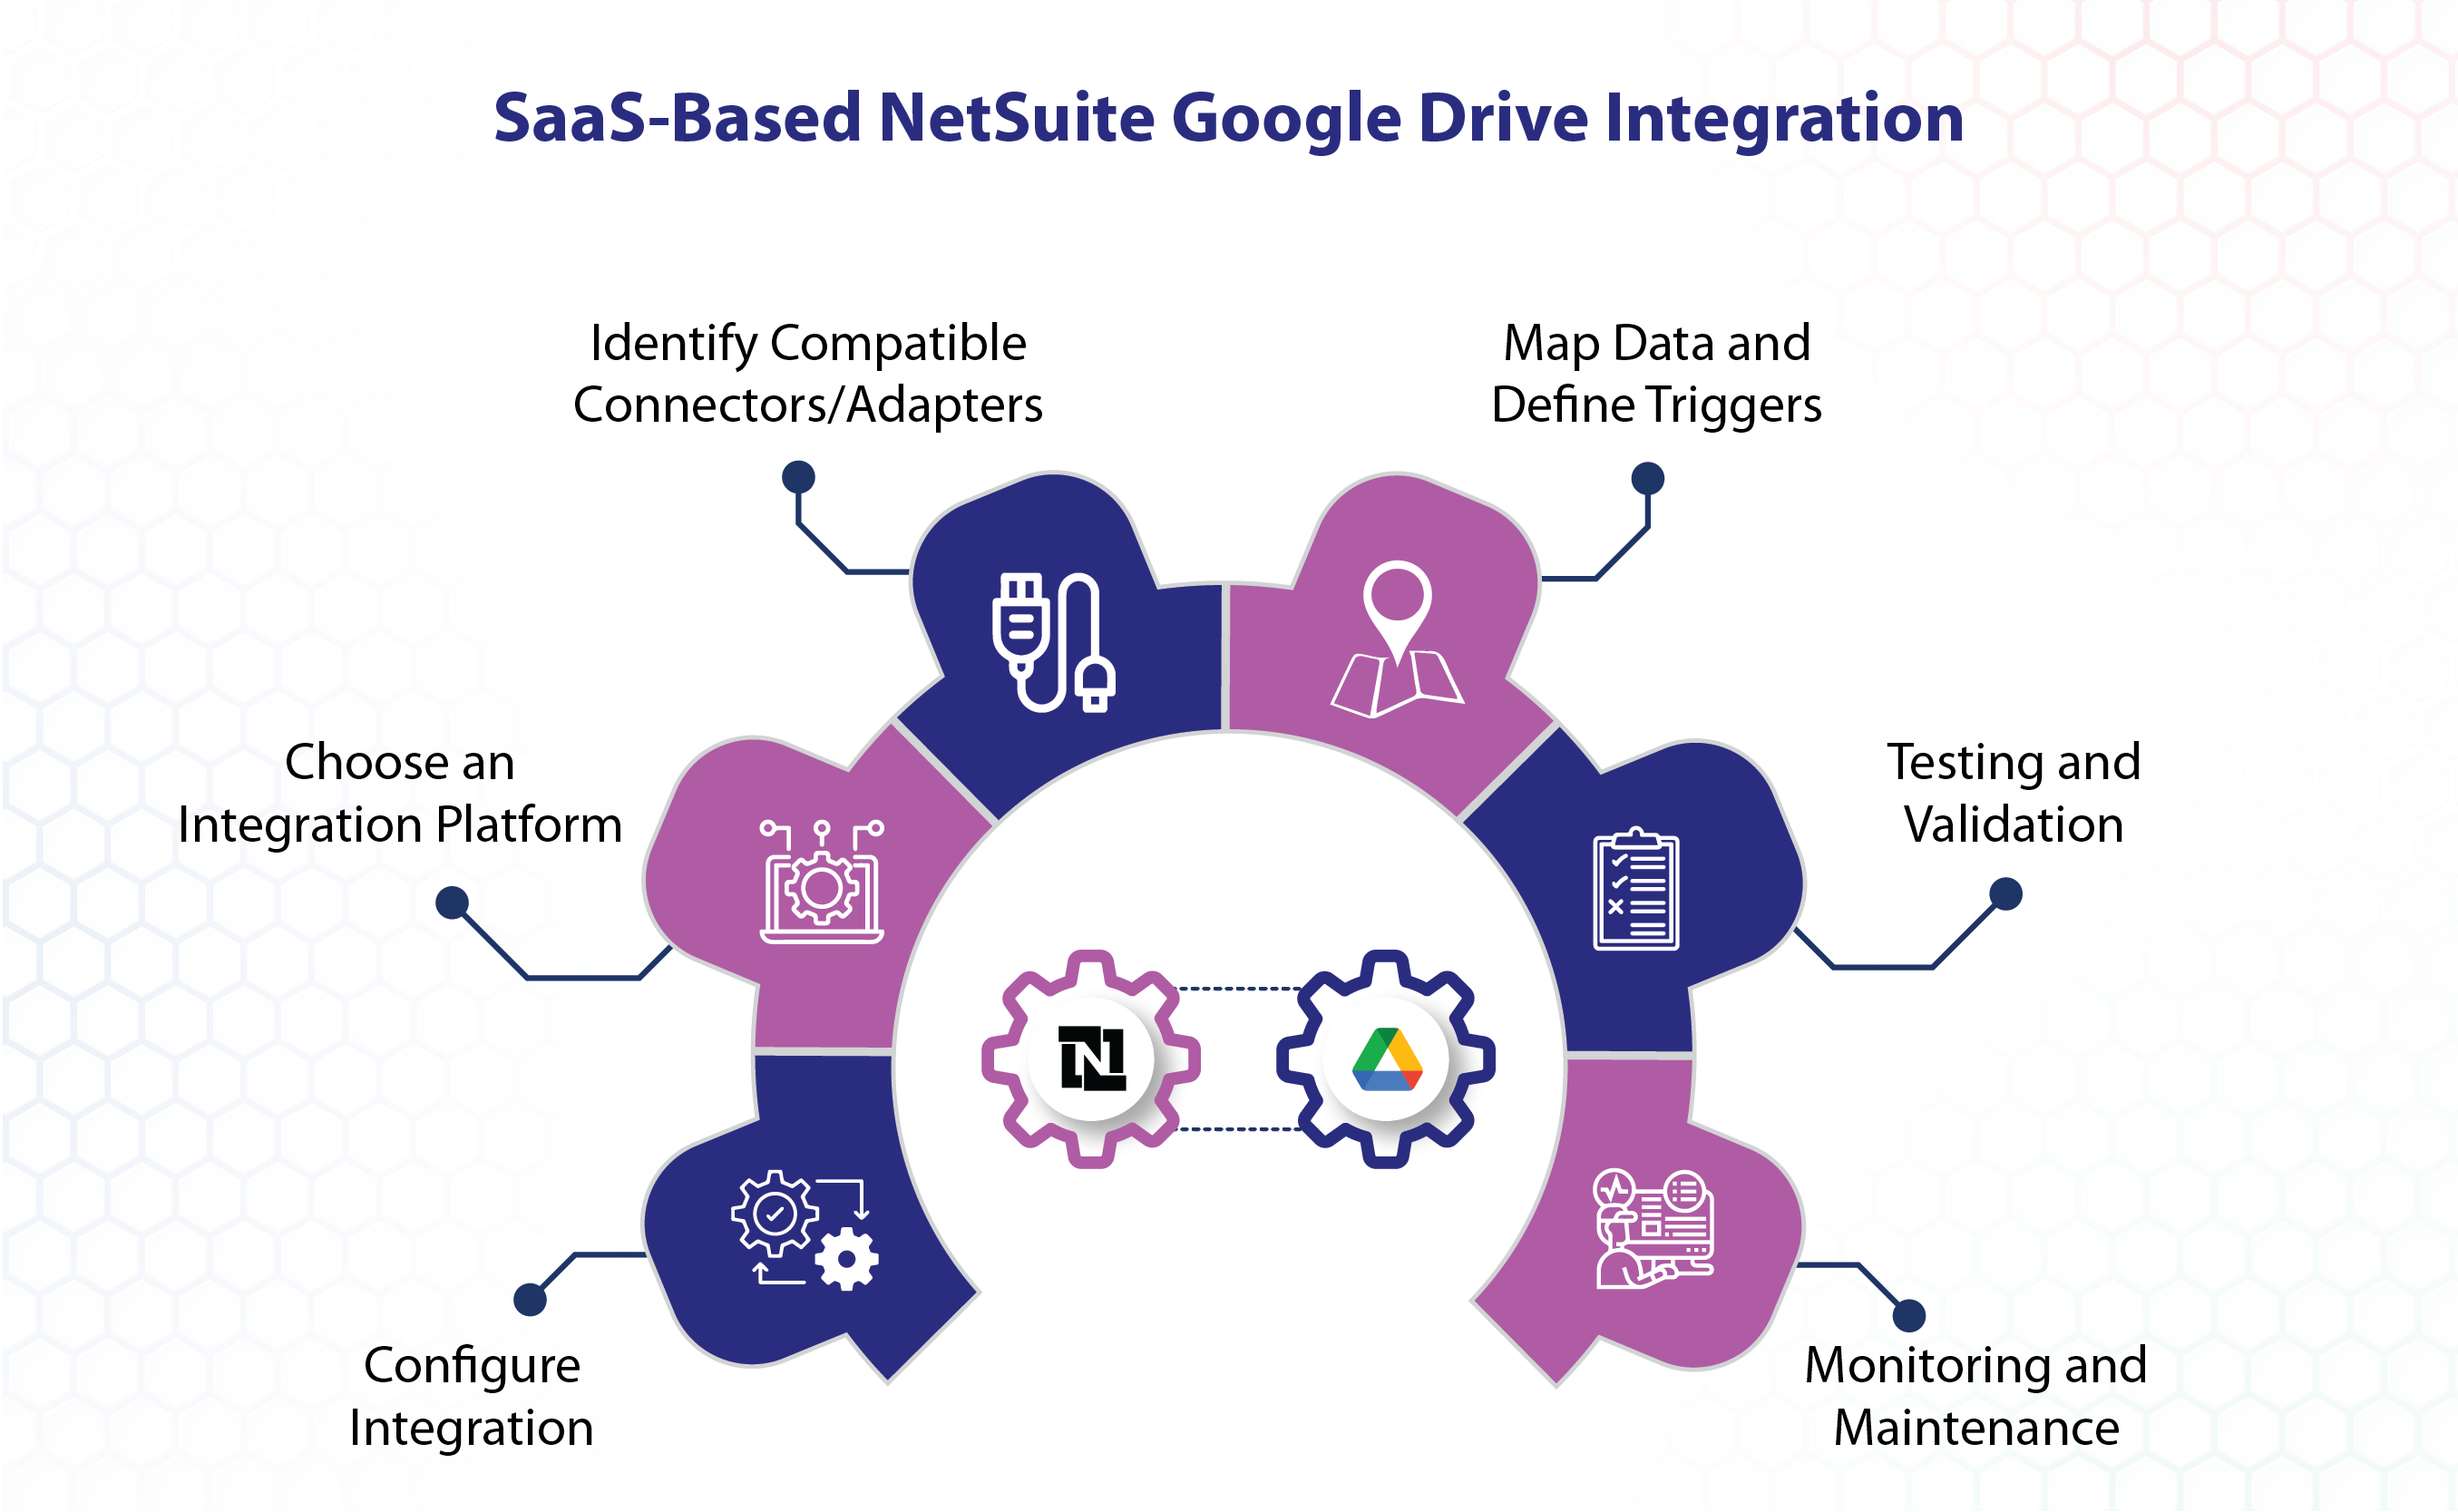 SaaS based NetSuite Google Drive Integration